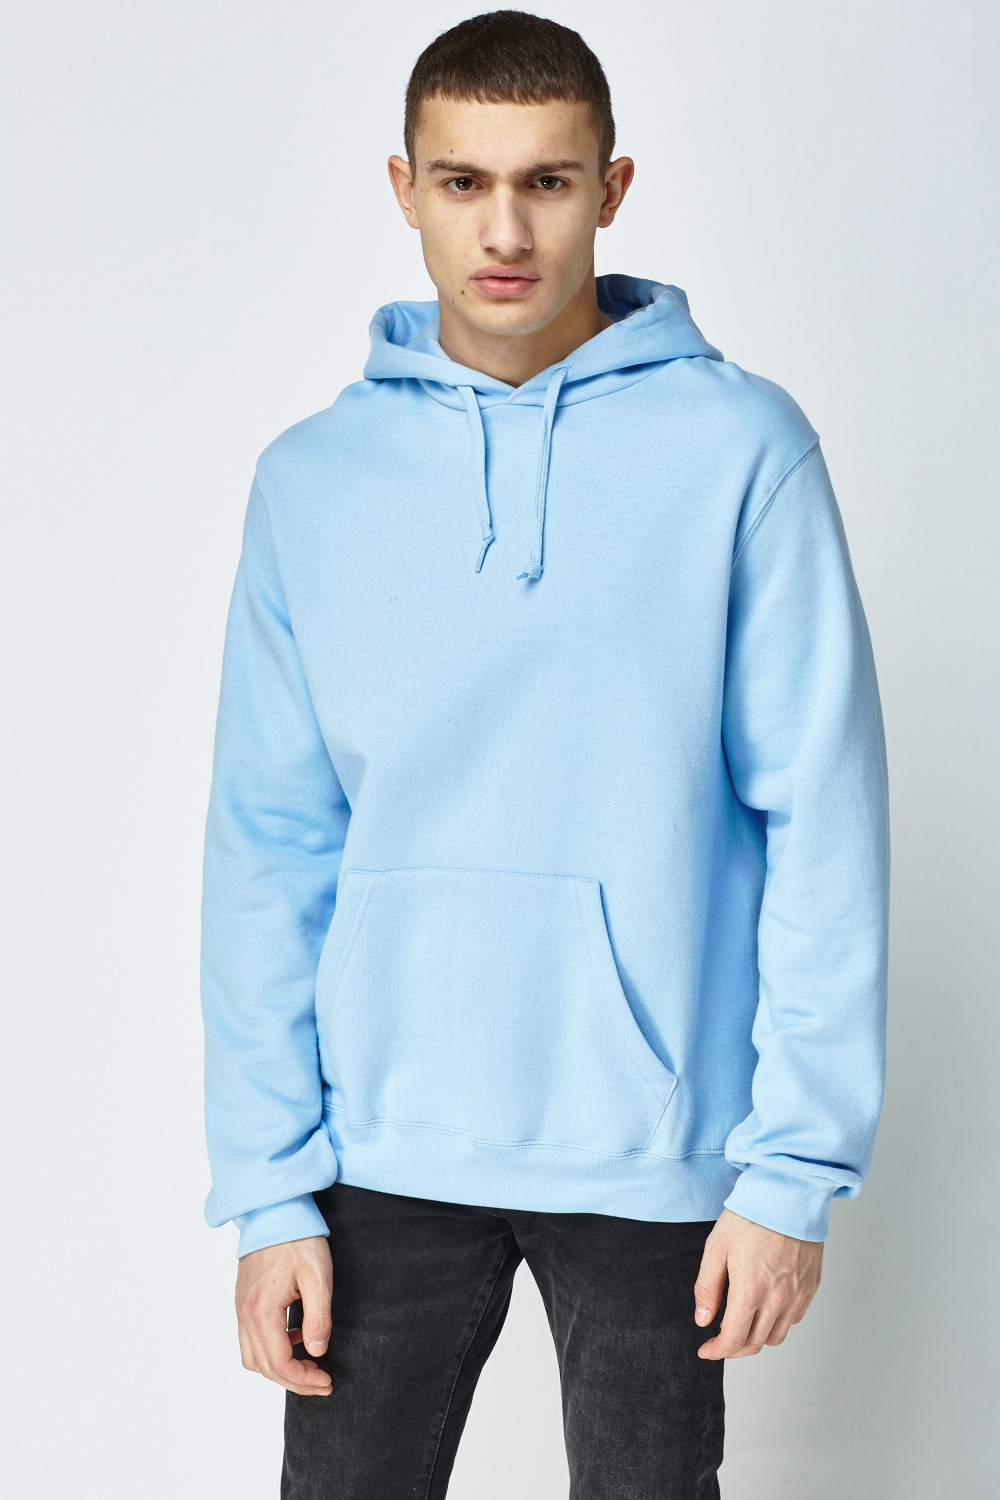 khols mens light blue sweatshirt